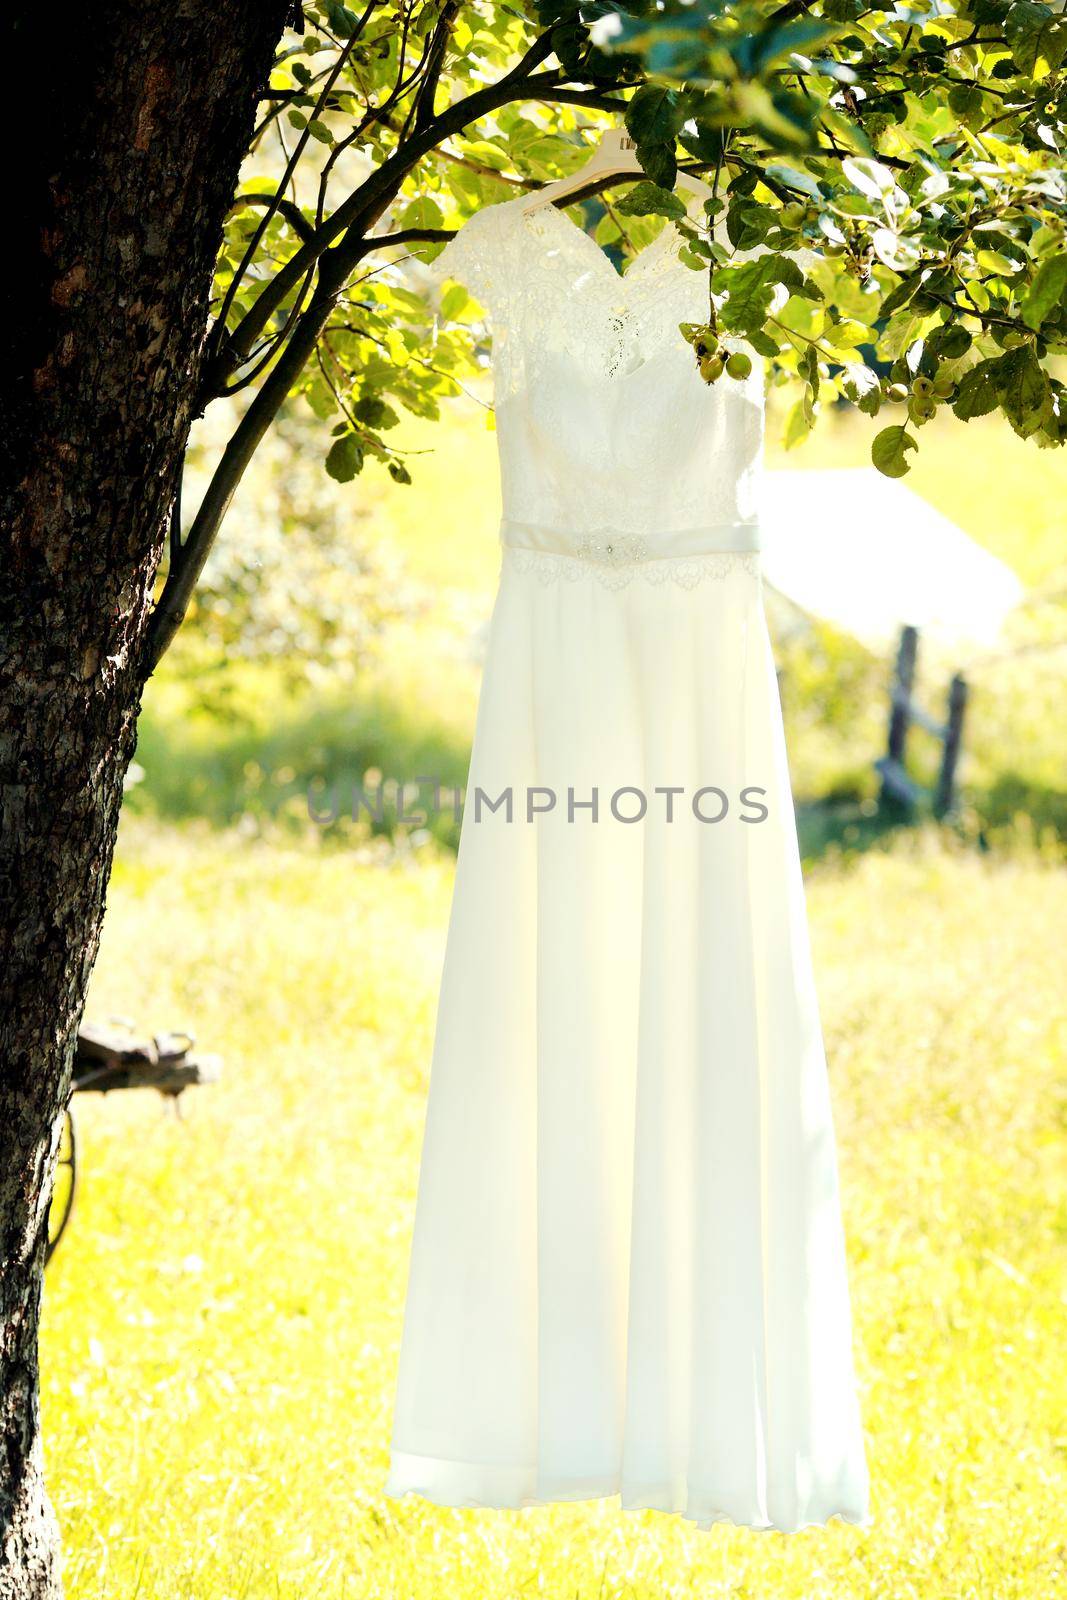 Bride dressing wedding gown